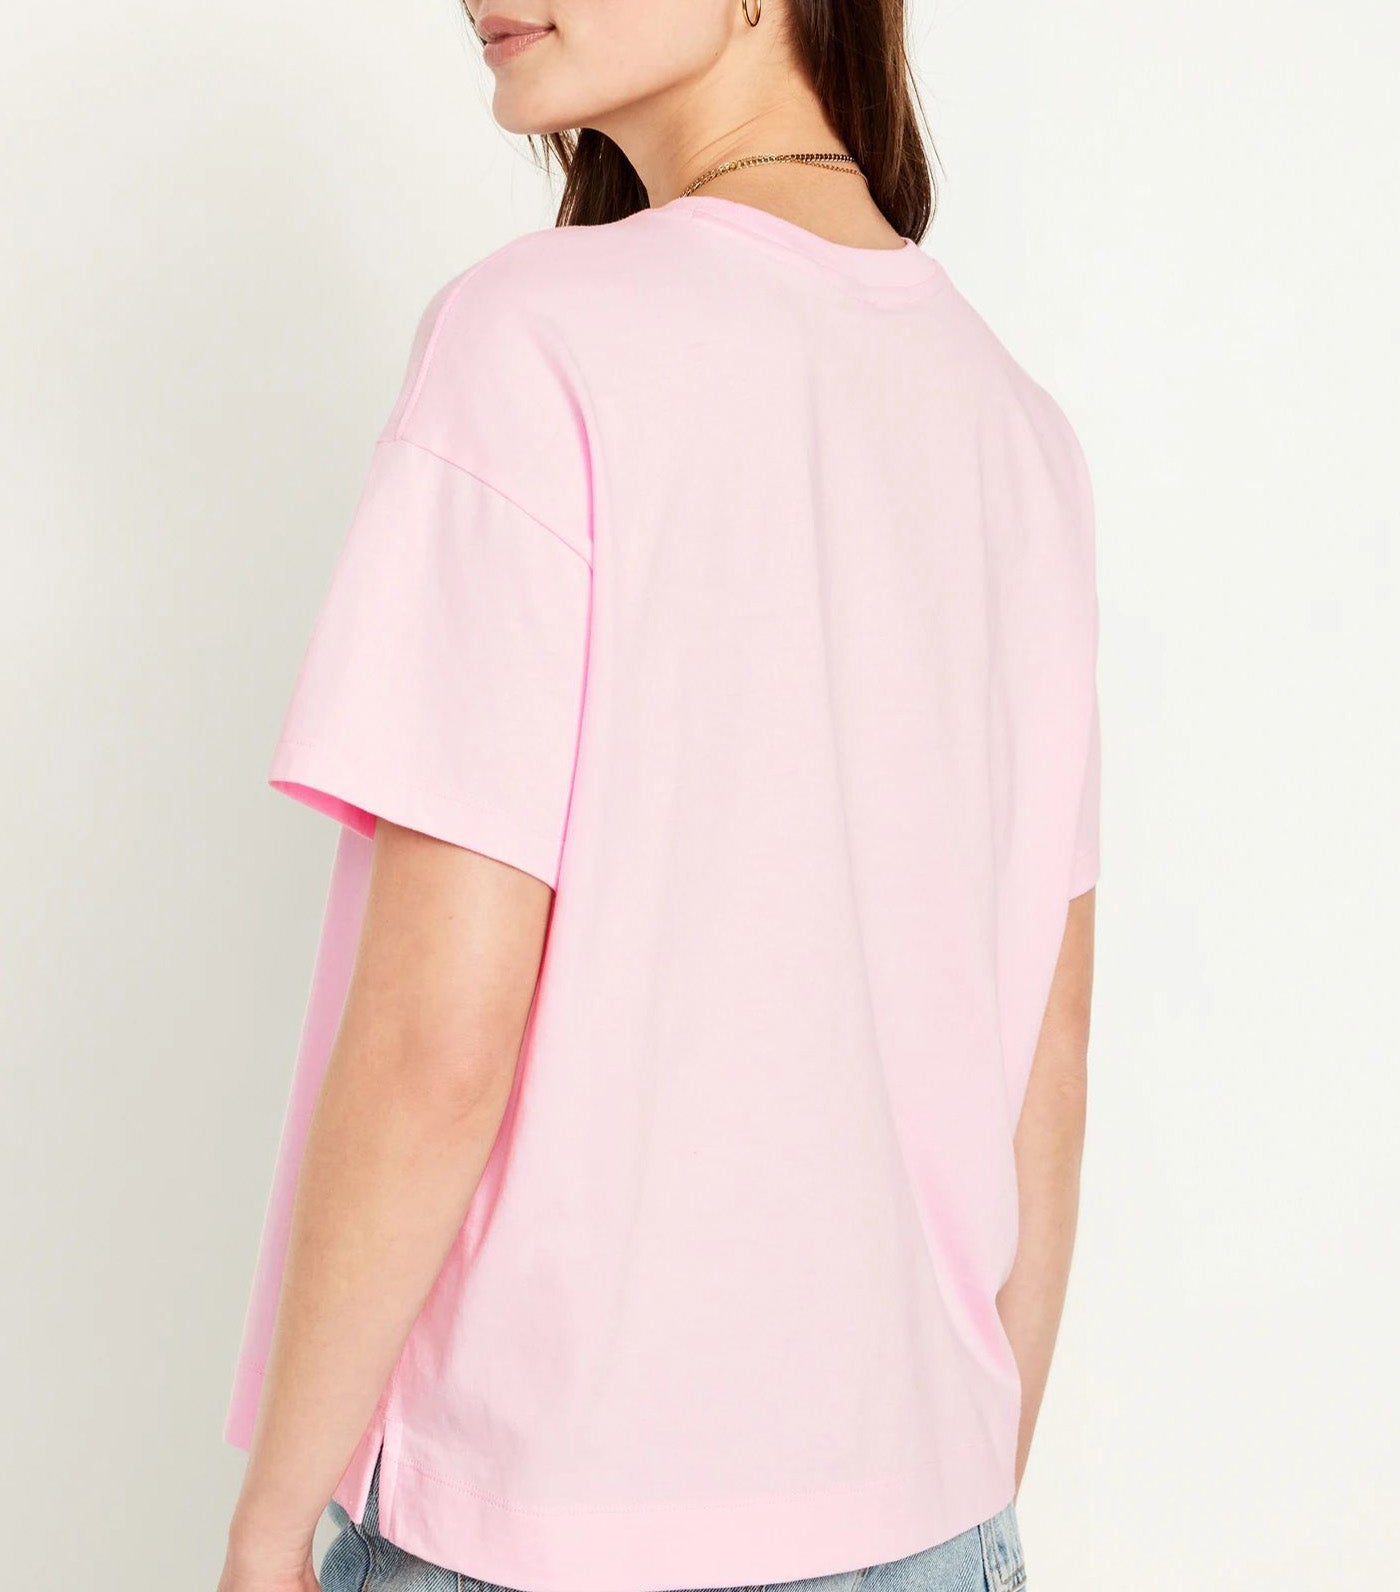 Vintage T-Shirt For Women Preppy Pink